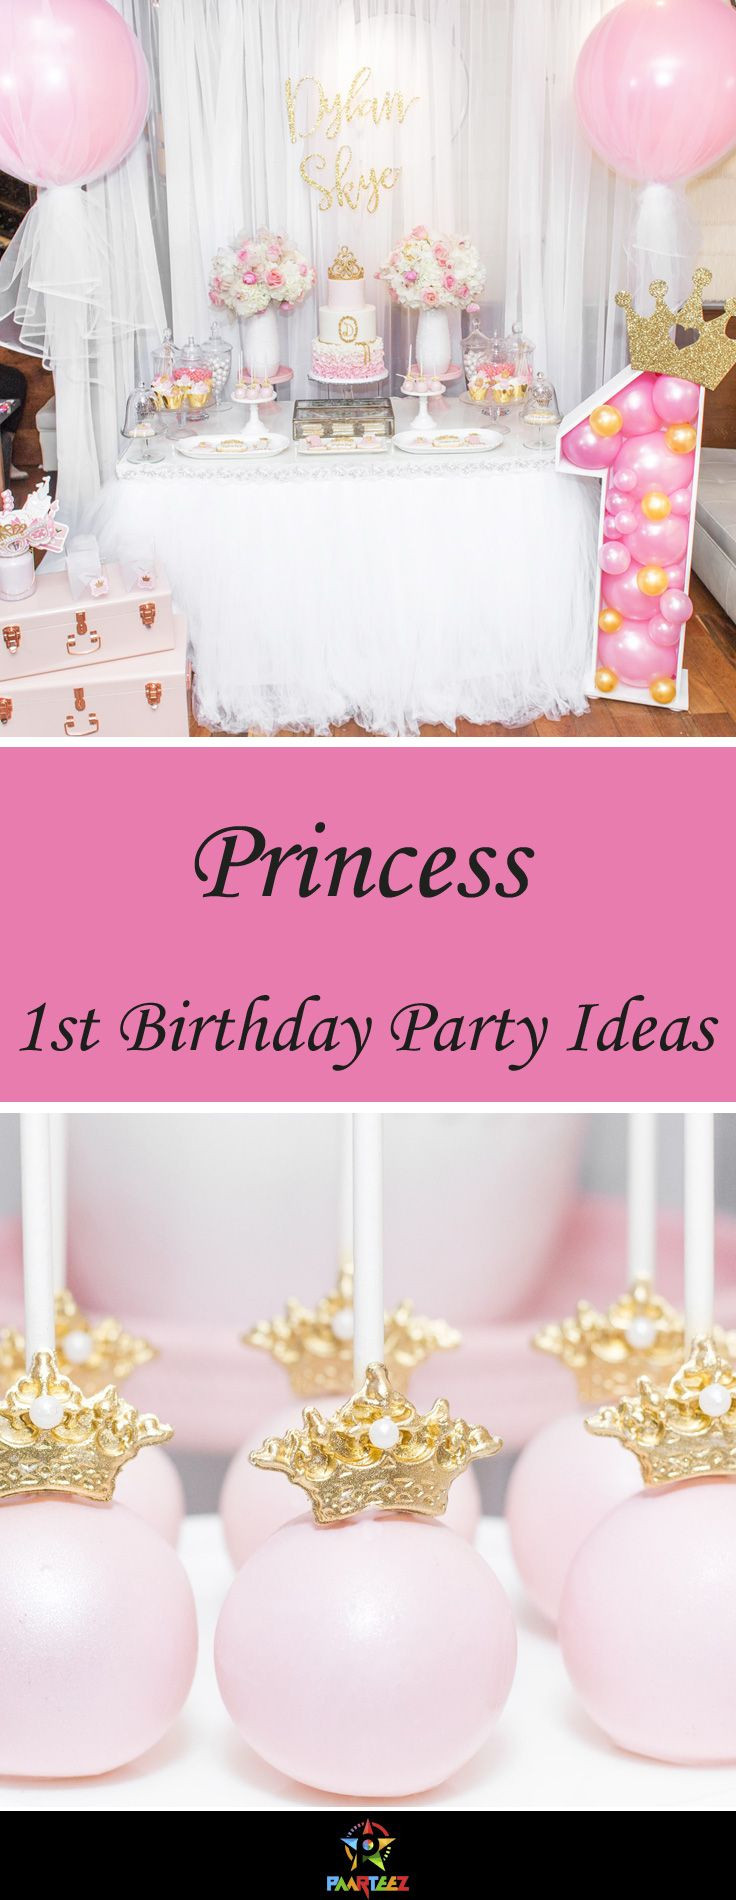 Princess 1St Birthday Party Ideas
 Best 25 Princess first birthday ideas on Pinterest